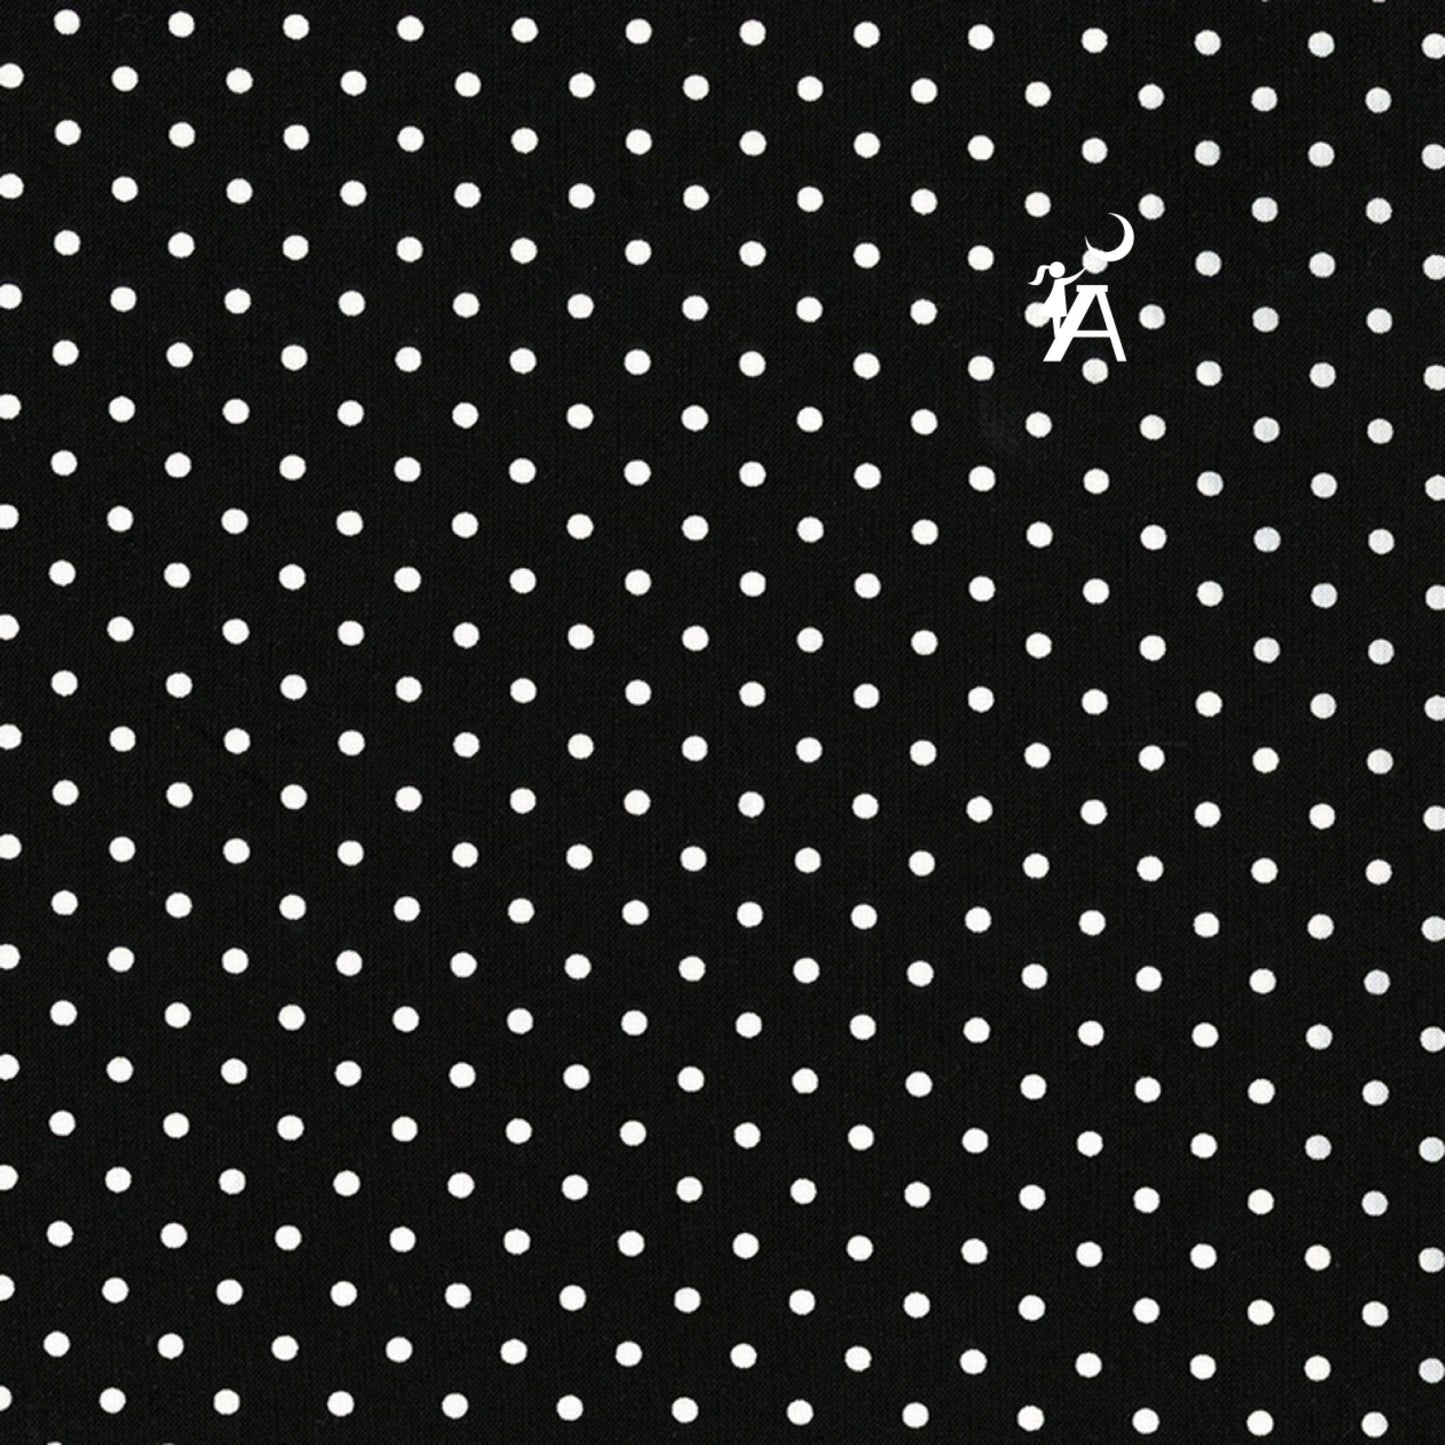 Maywood Studio Fabric 1 yard (36"x44") / Black w/ white dots Geometric Cotton Fabric, Polka Dot or striped fabric, Lady bug spot fabric, Lady bug dots, , Cotton fabric by the yard